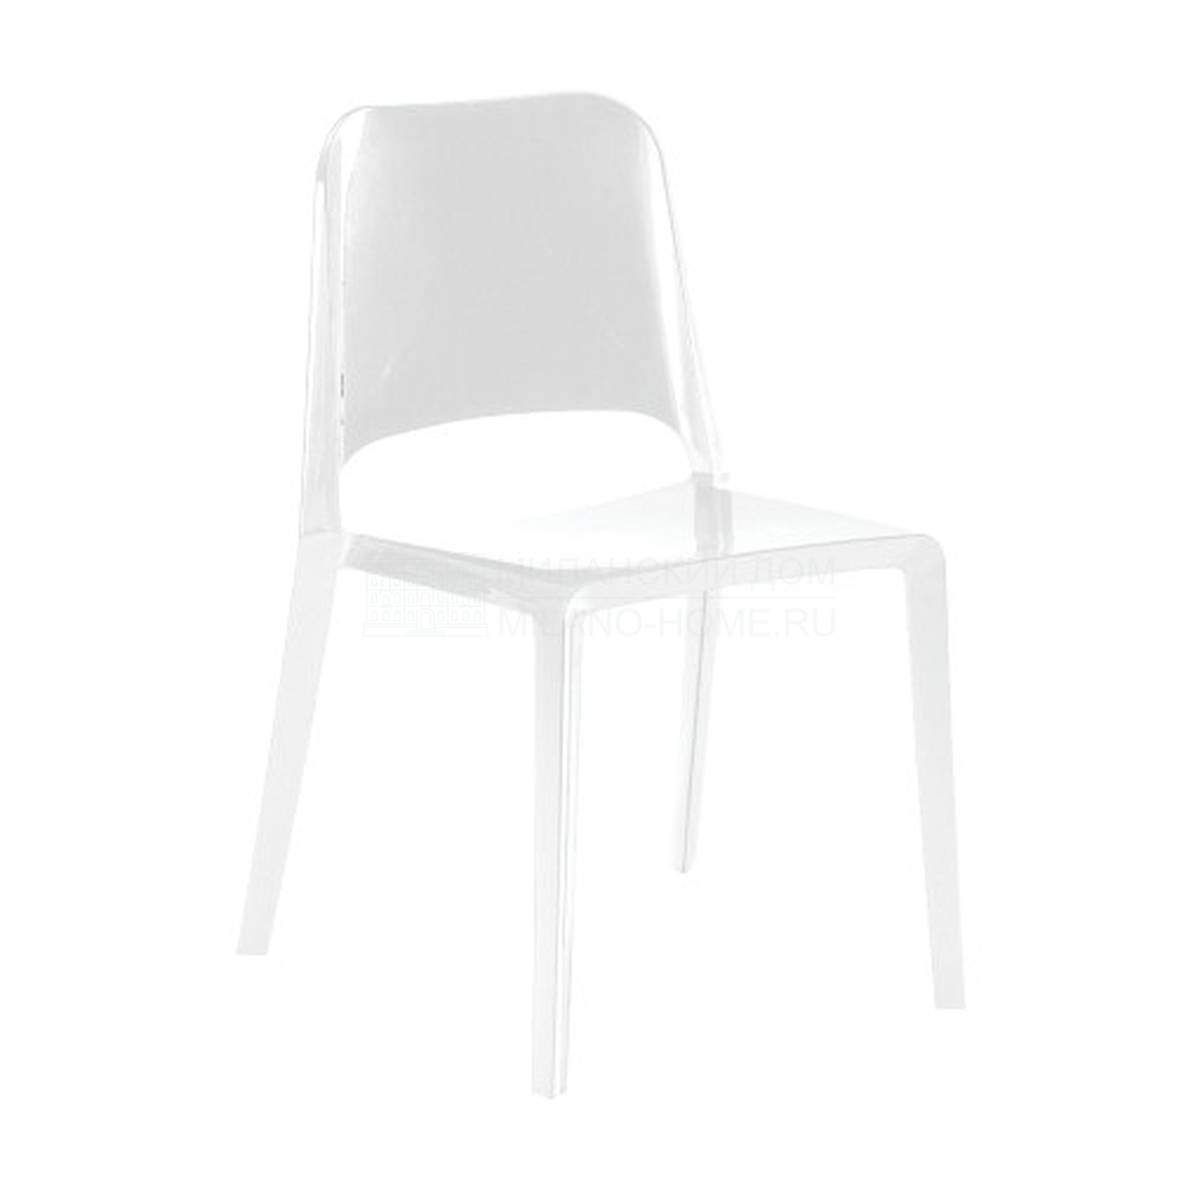 Металлический / Пластиковый стул Kate 2050 chair из Италии фабрики ZANOTTA